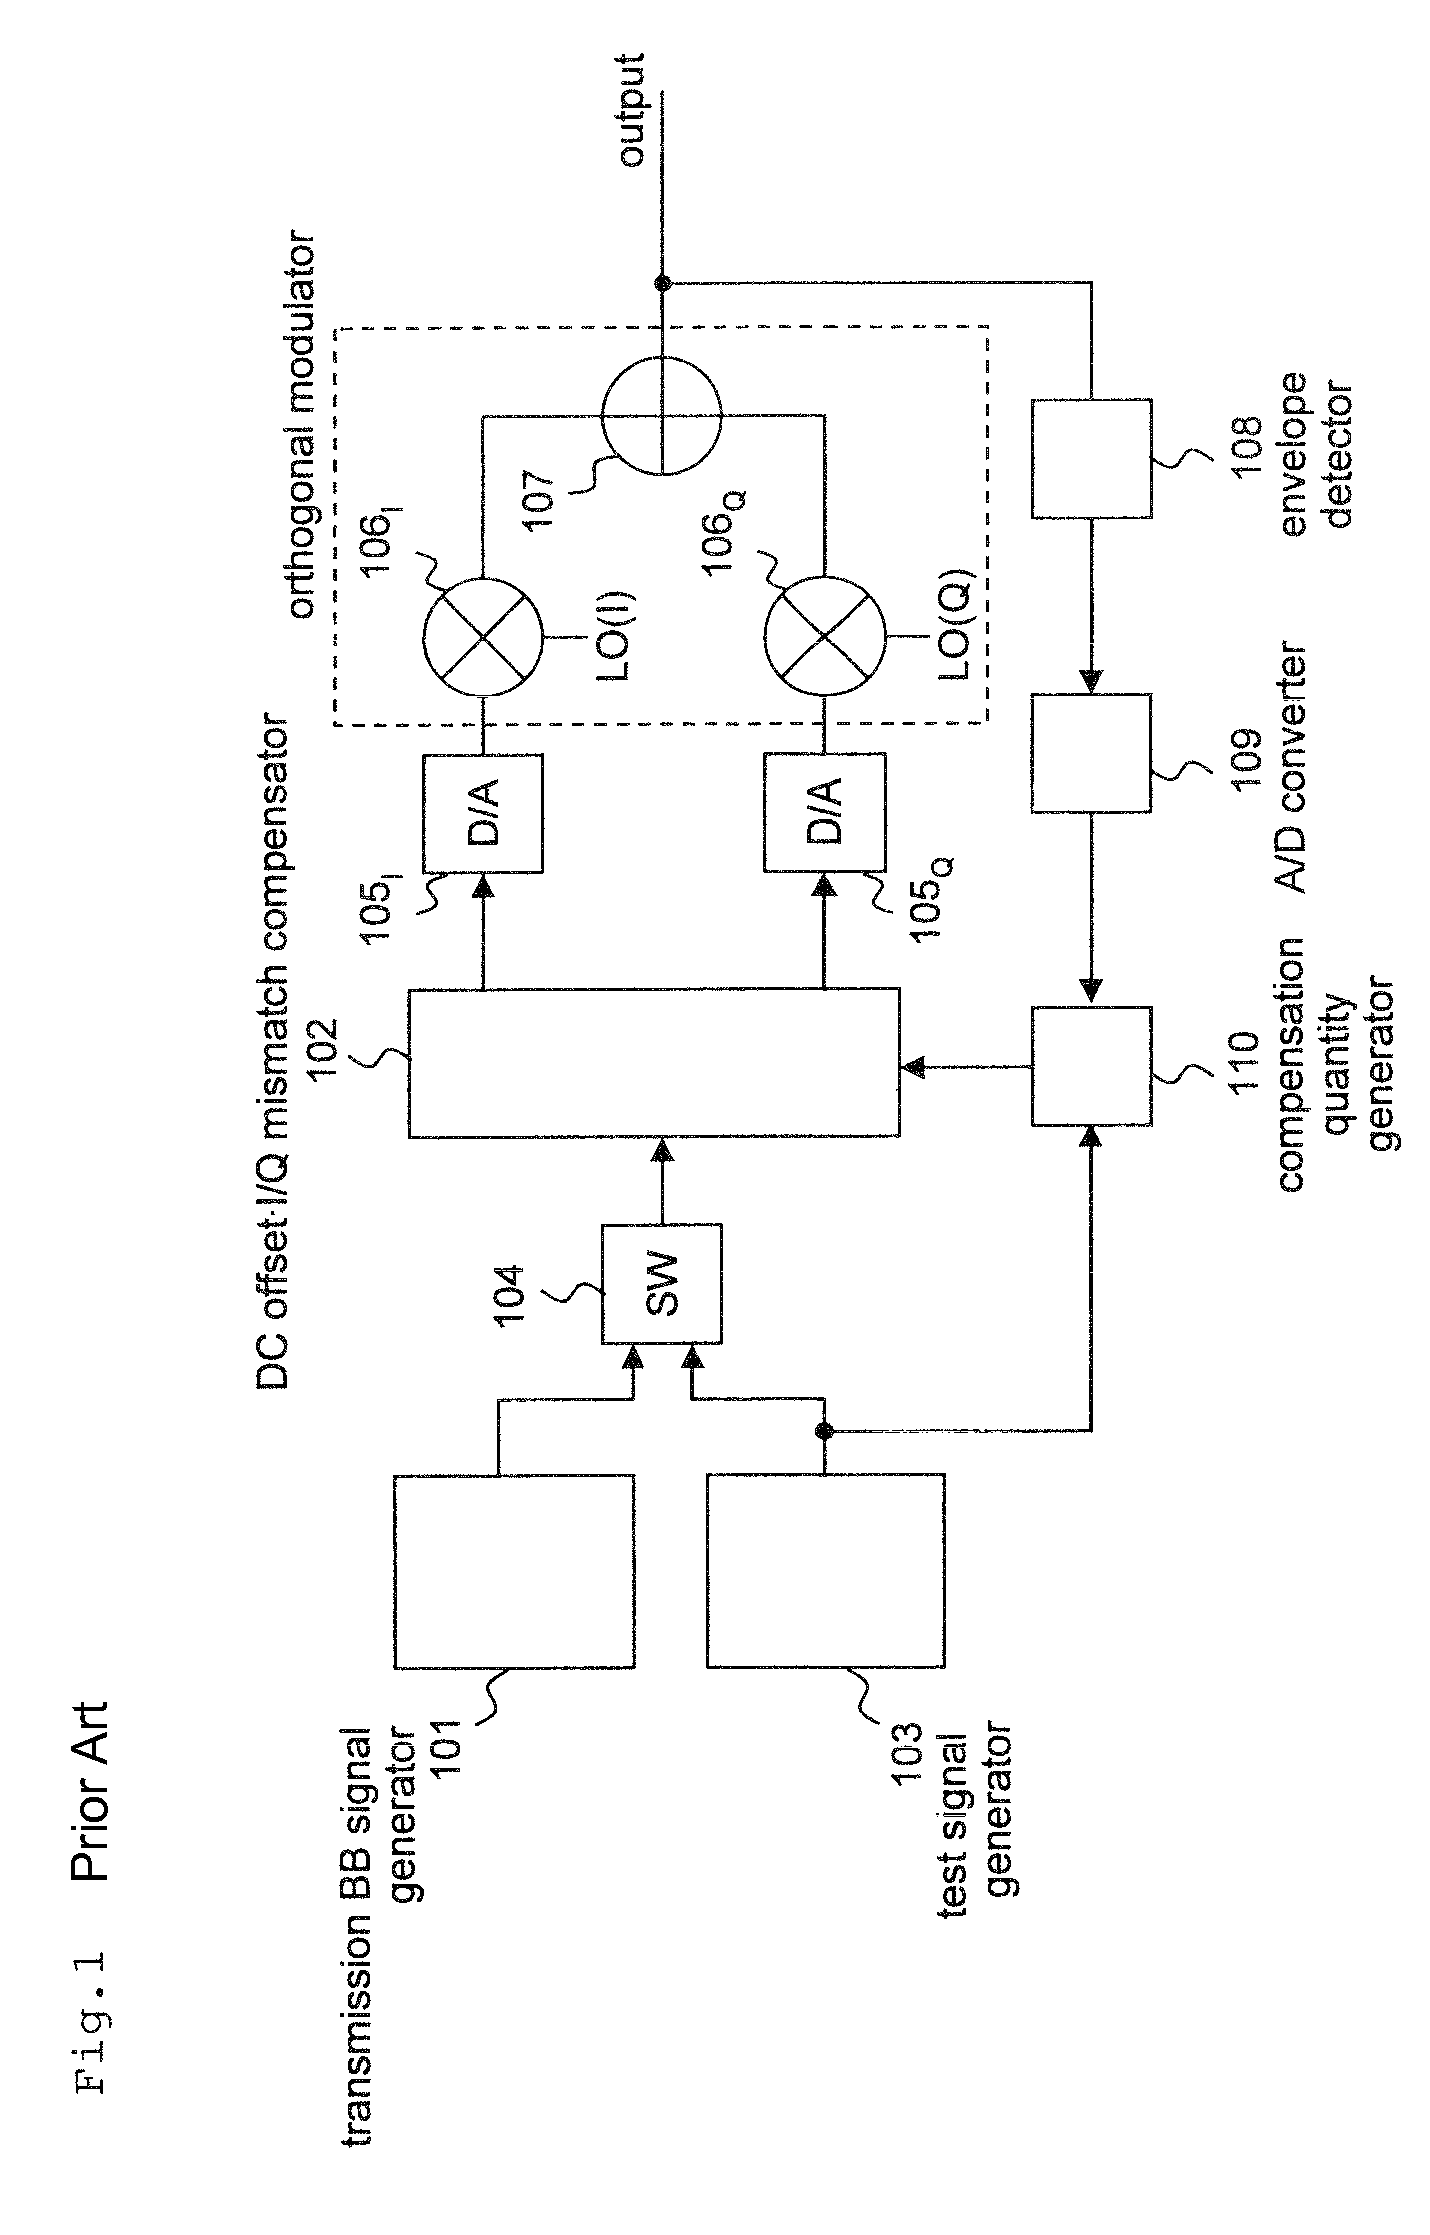 Signal processing circuit